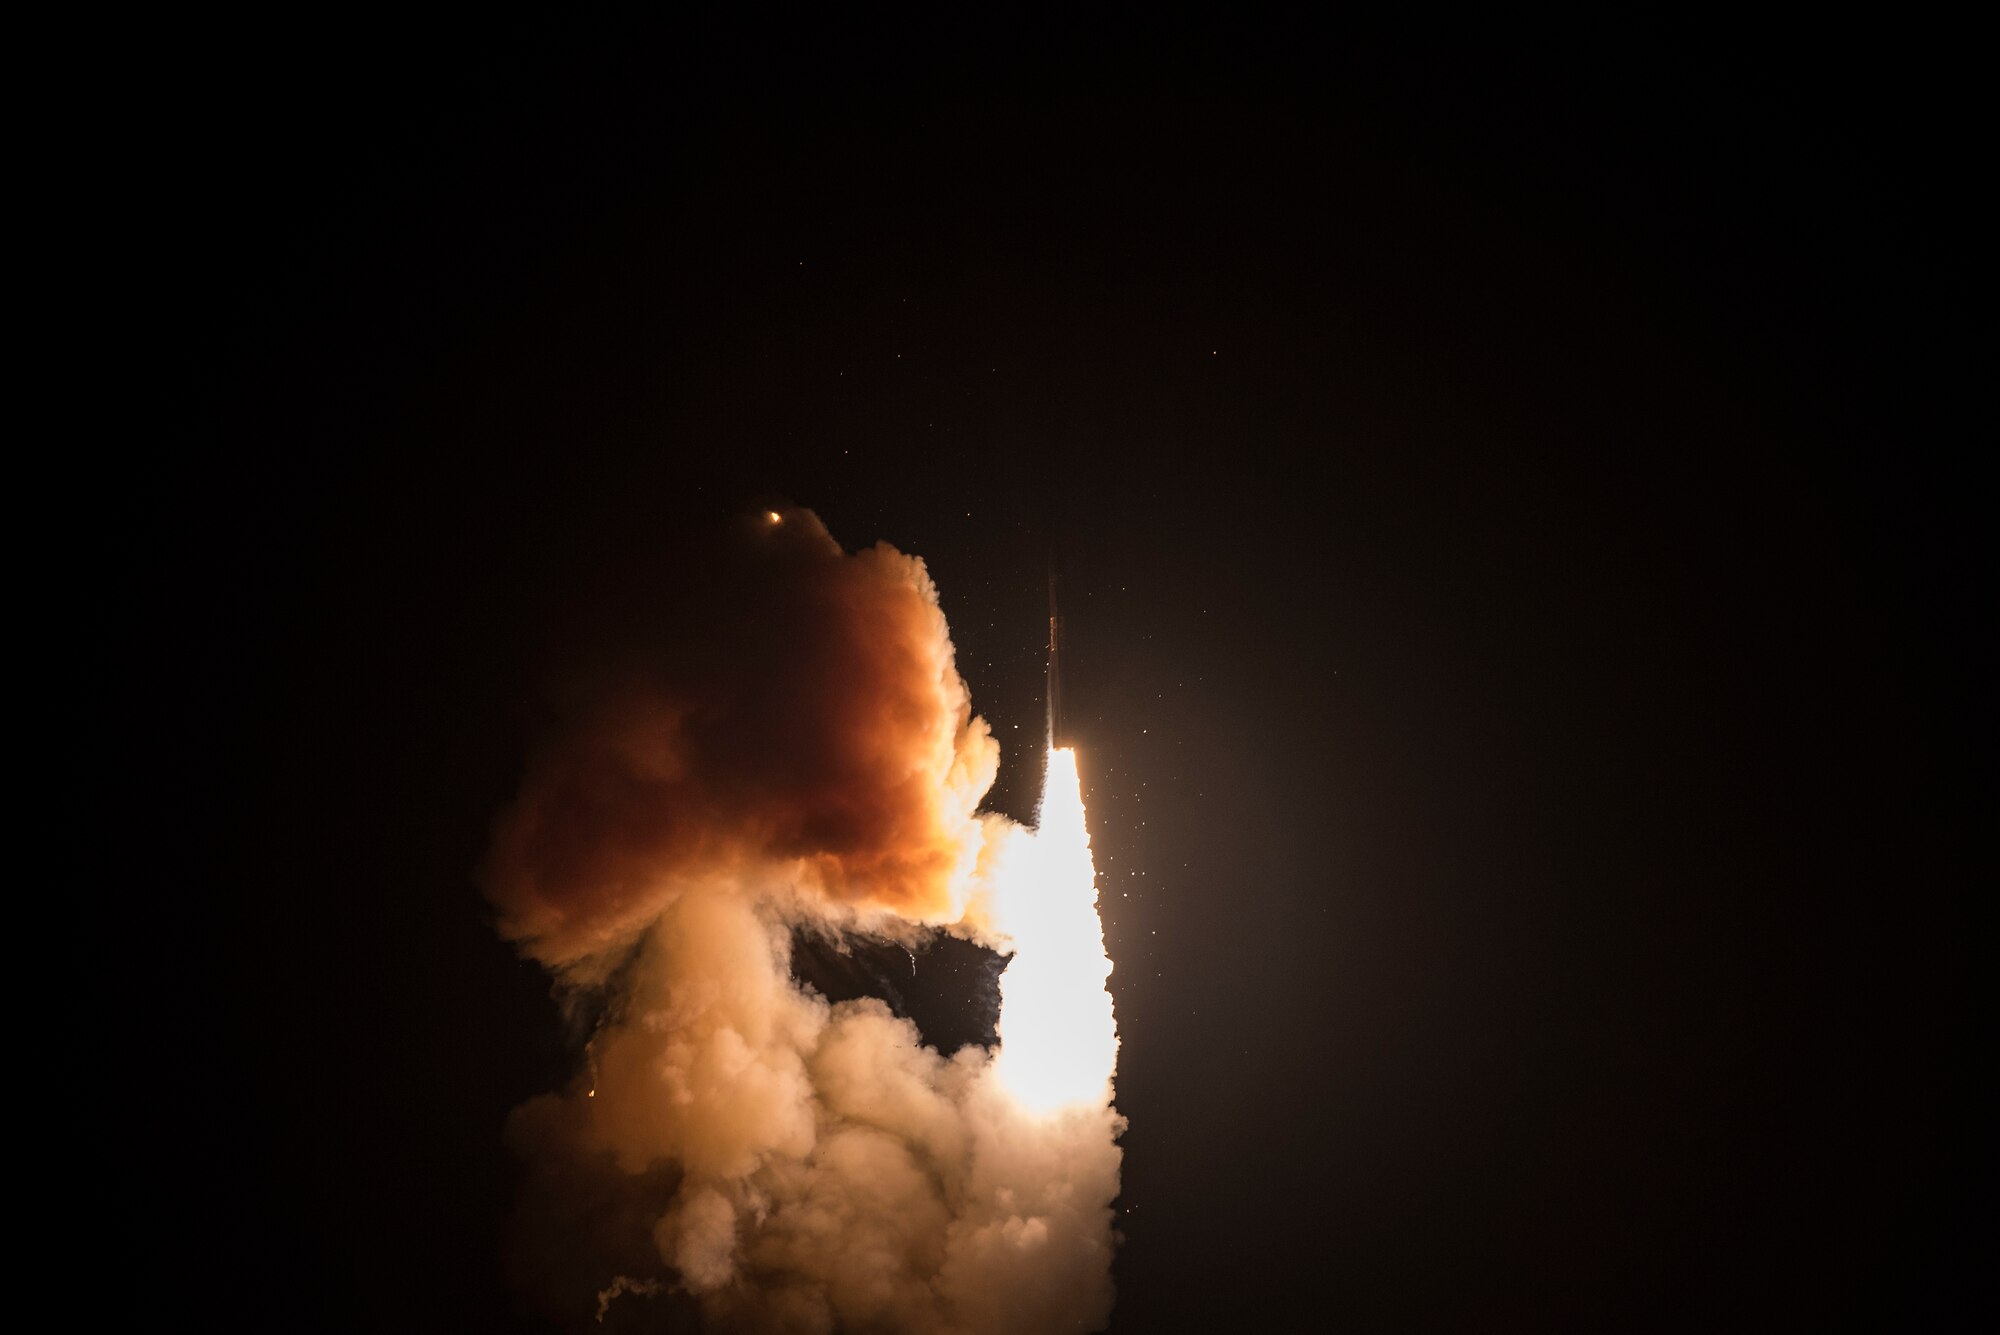 Minuteman III launches during a developmental test